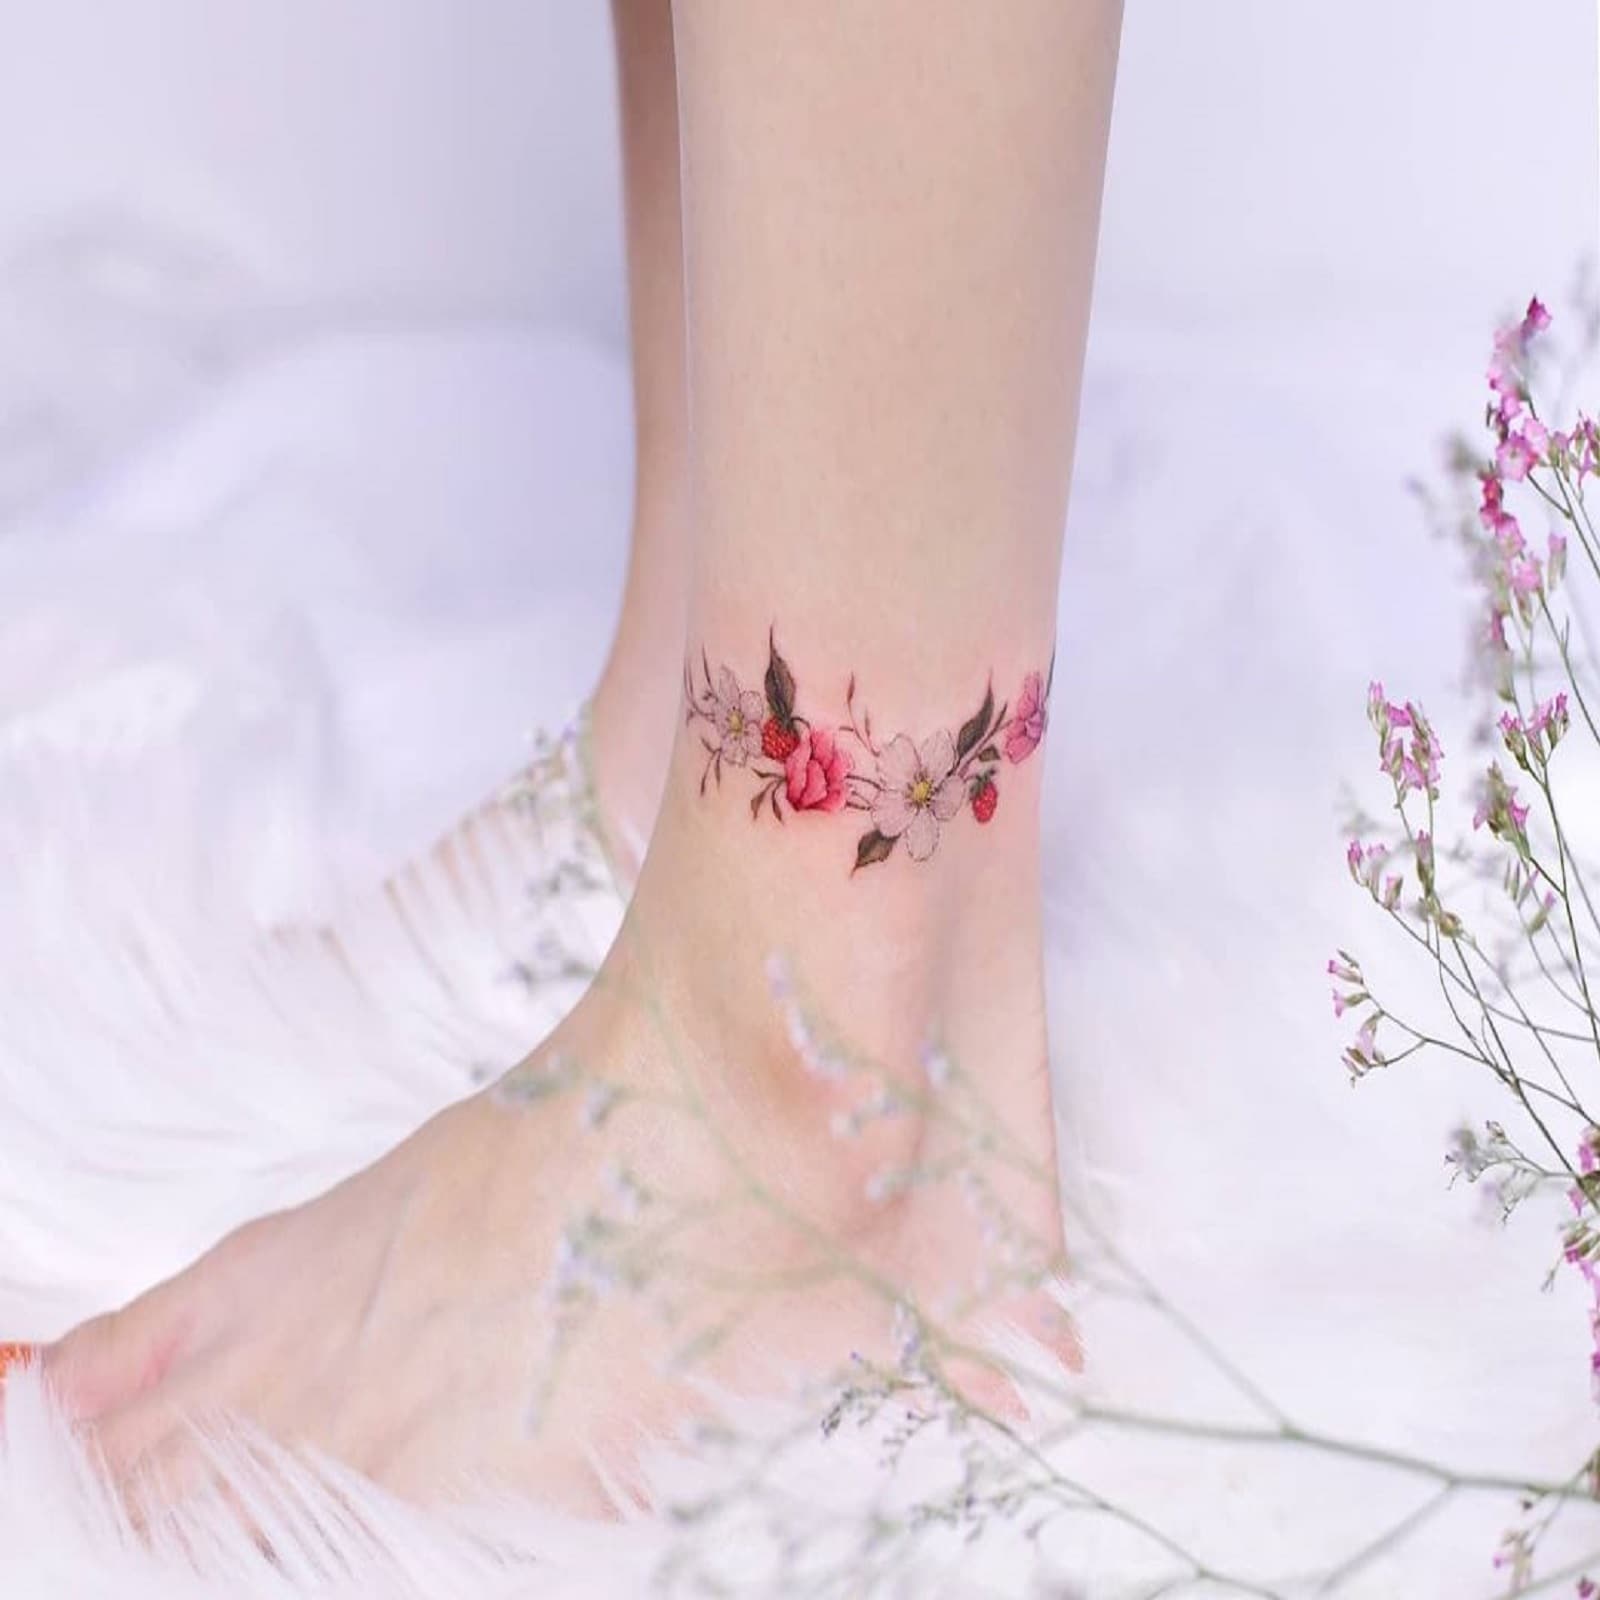 Ordershock Ankle Jewellery Ankle band Like Payal Tattoo Waterproof For  Girls Women Temporary Body Tattoo  Amazonin Beauty